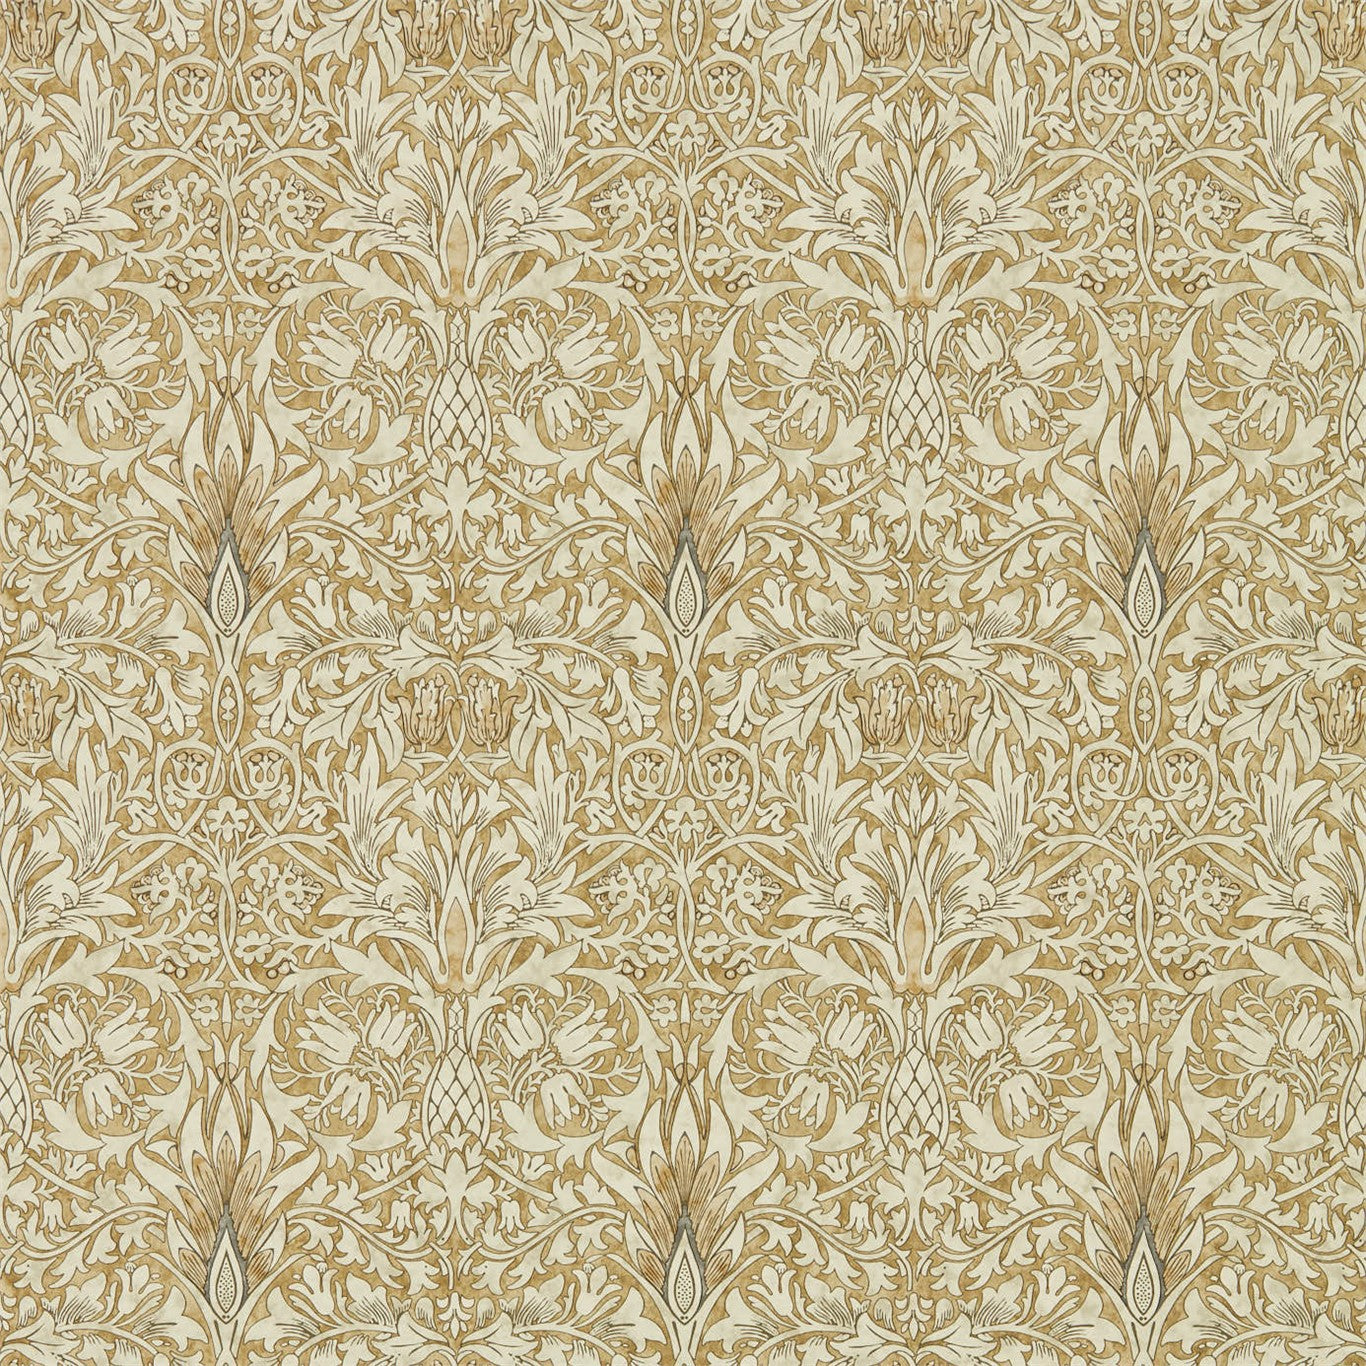 Snakeshead Gold/Linen Wallpaper DMA4216429 by Morris & Co